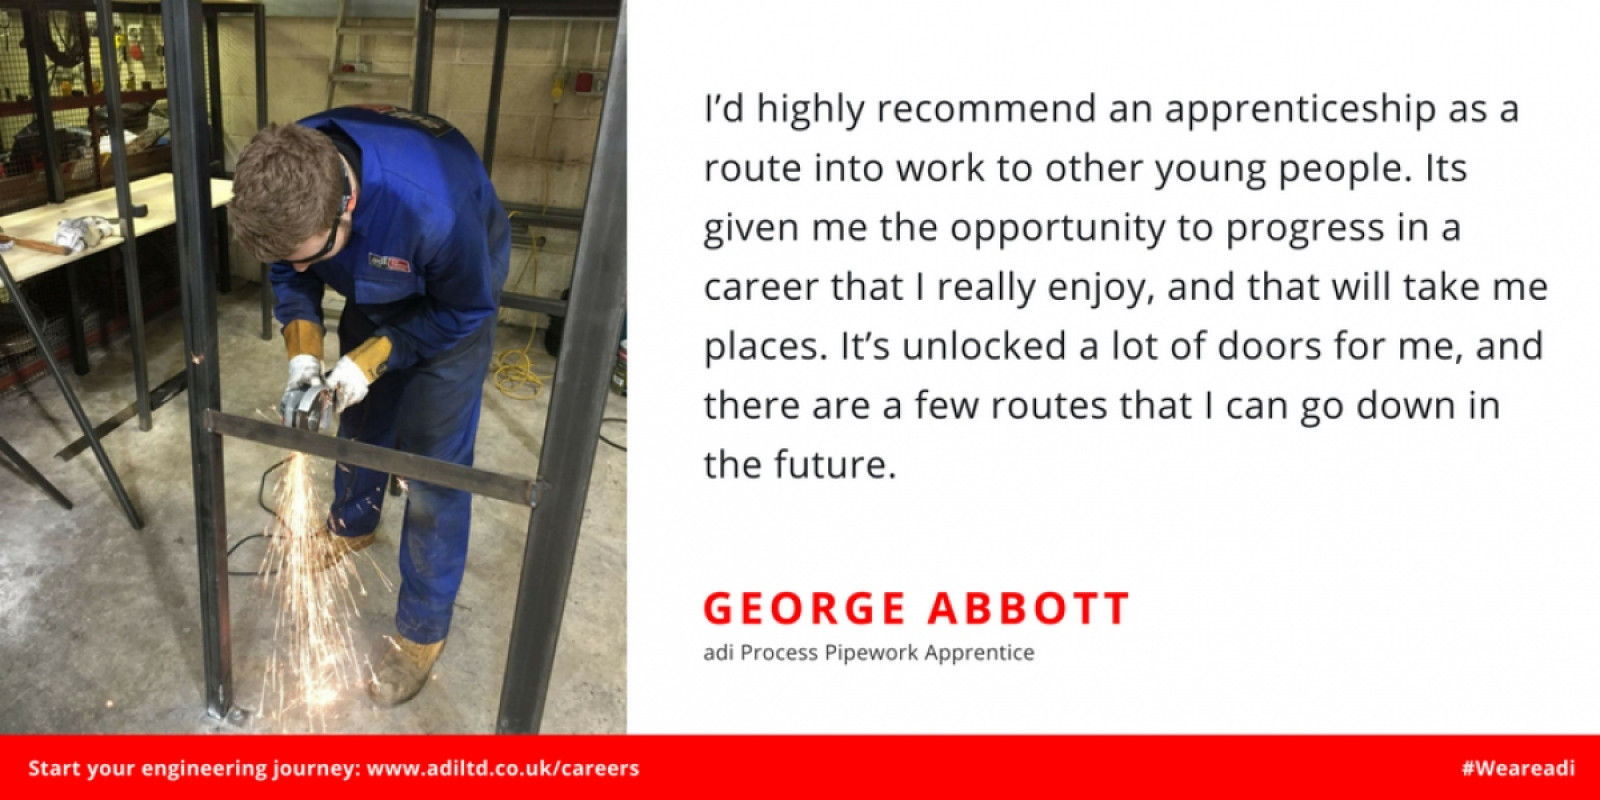 Apprentice Case Study: George Abbott Shares His Ap...